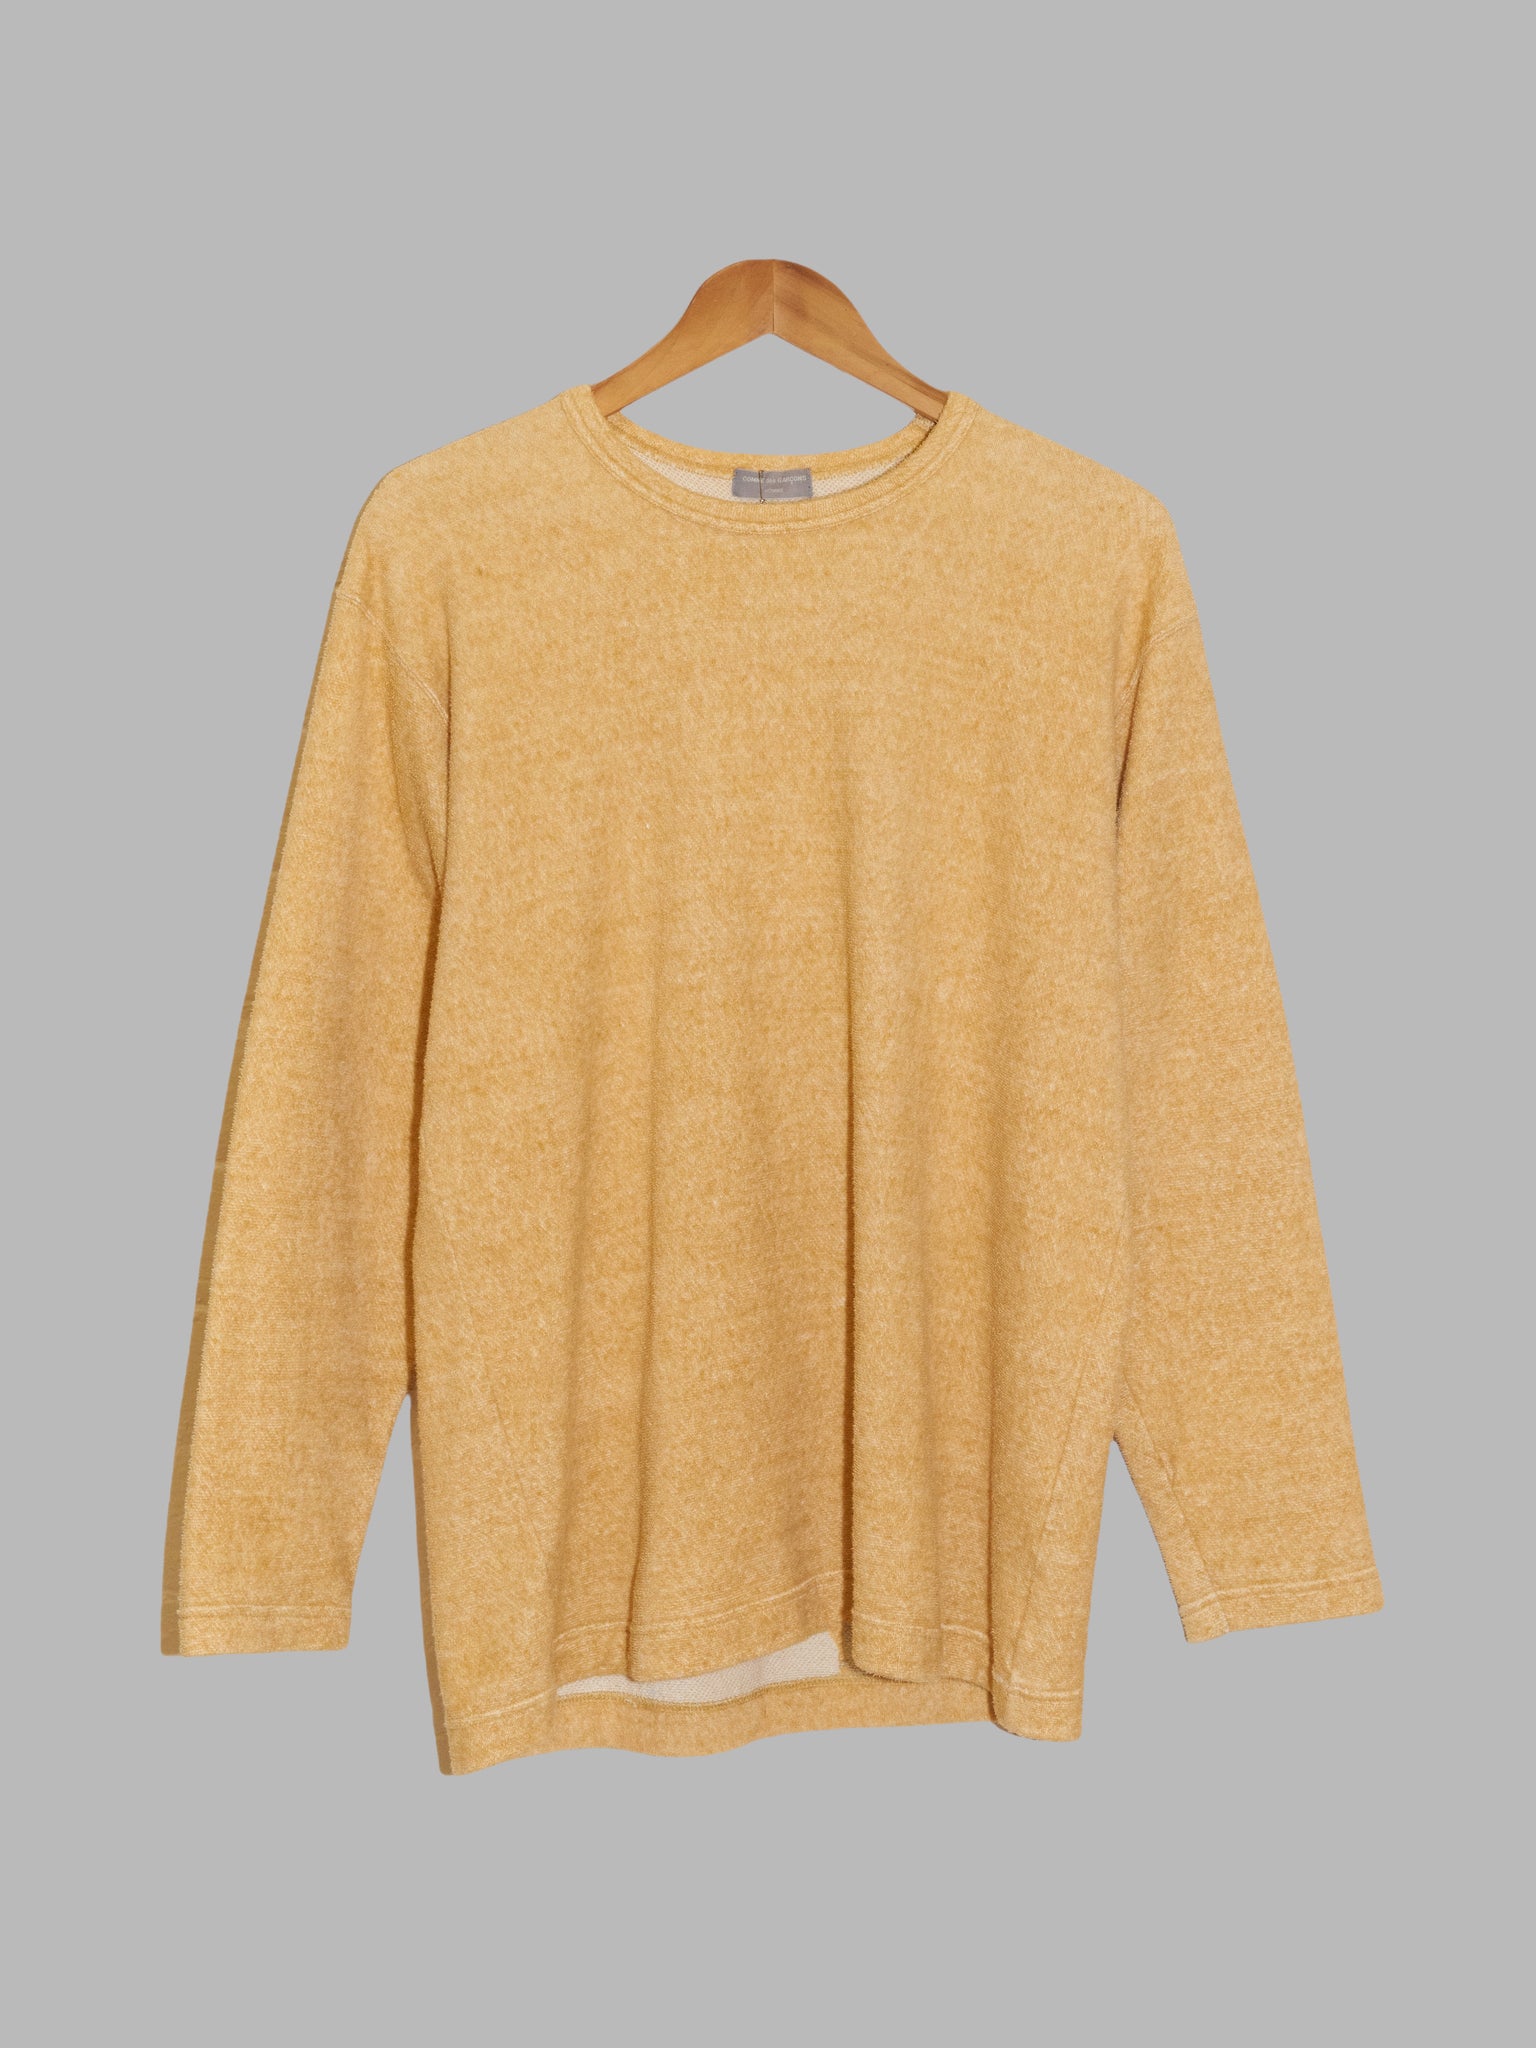 Comme des Garcons Homme 1990s sand-y yellow towelling sweatshirt - M